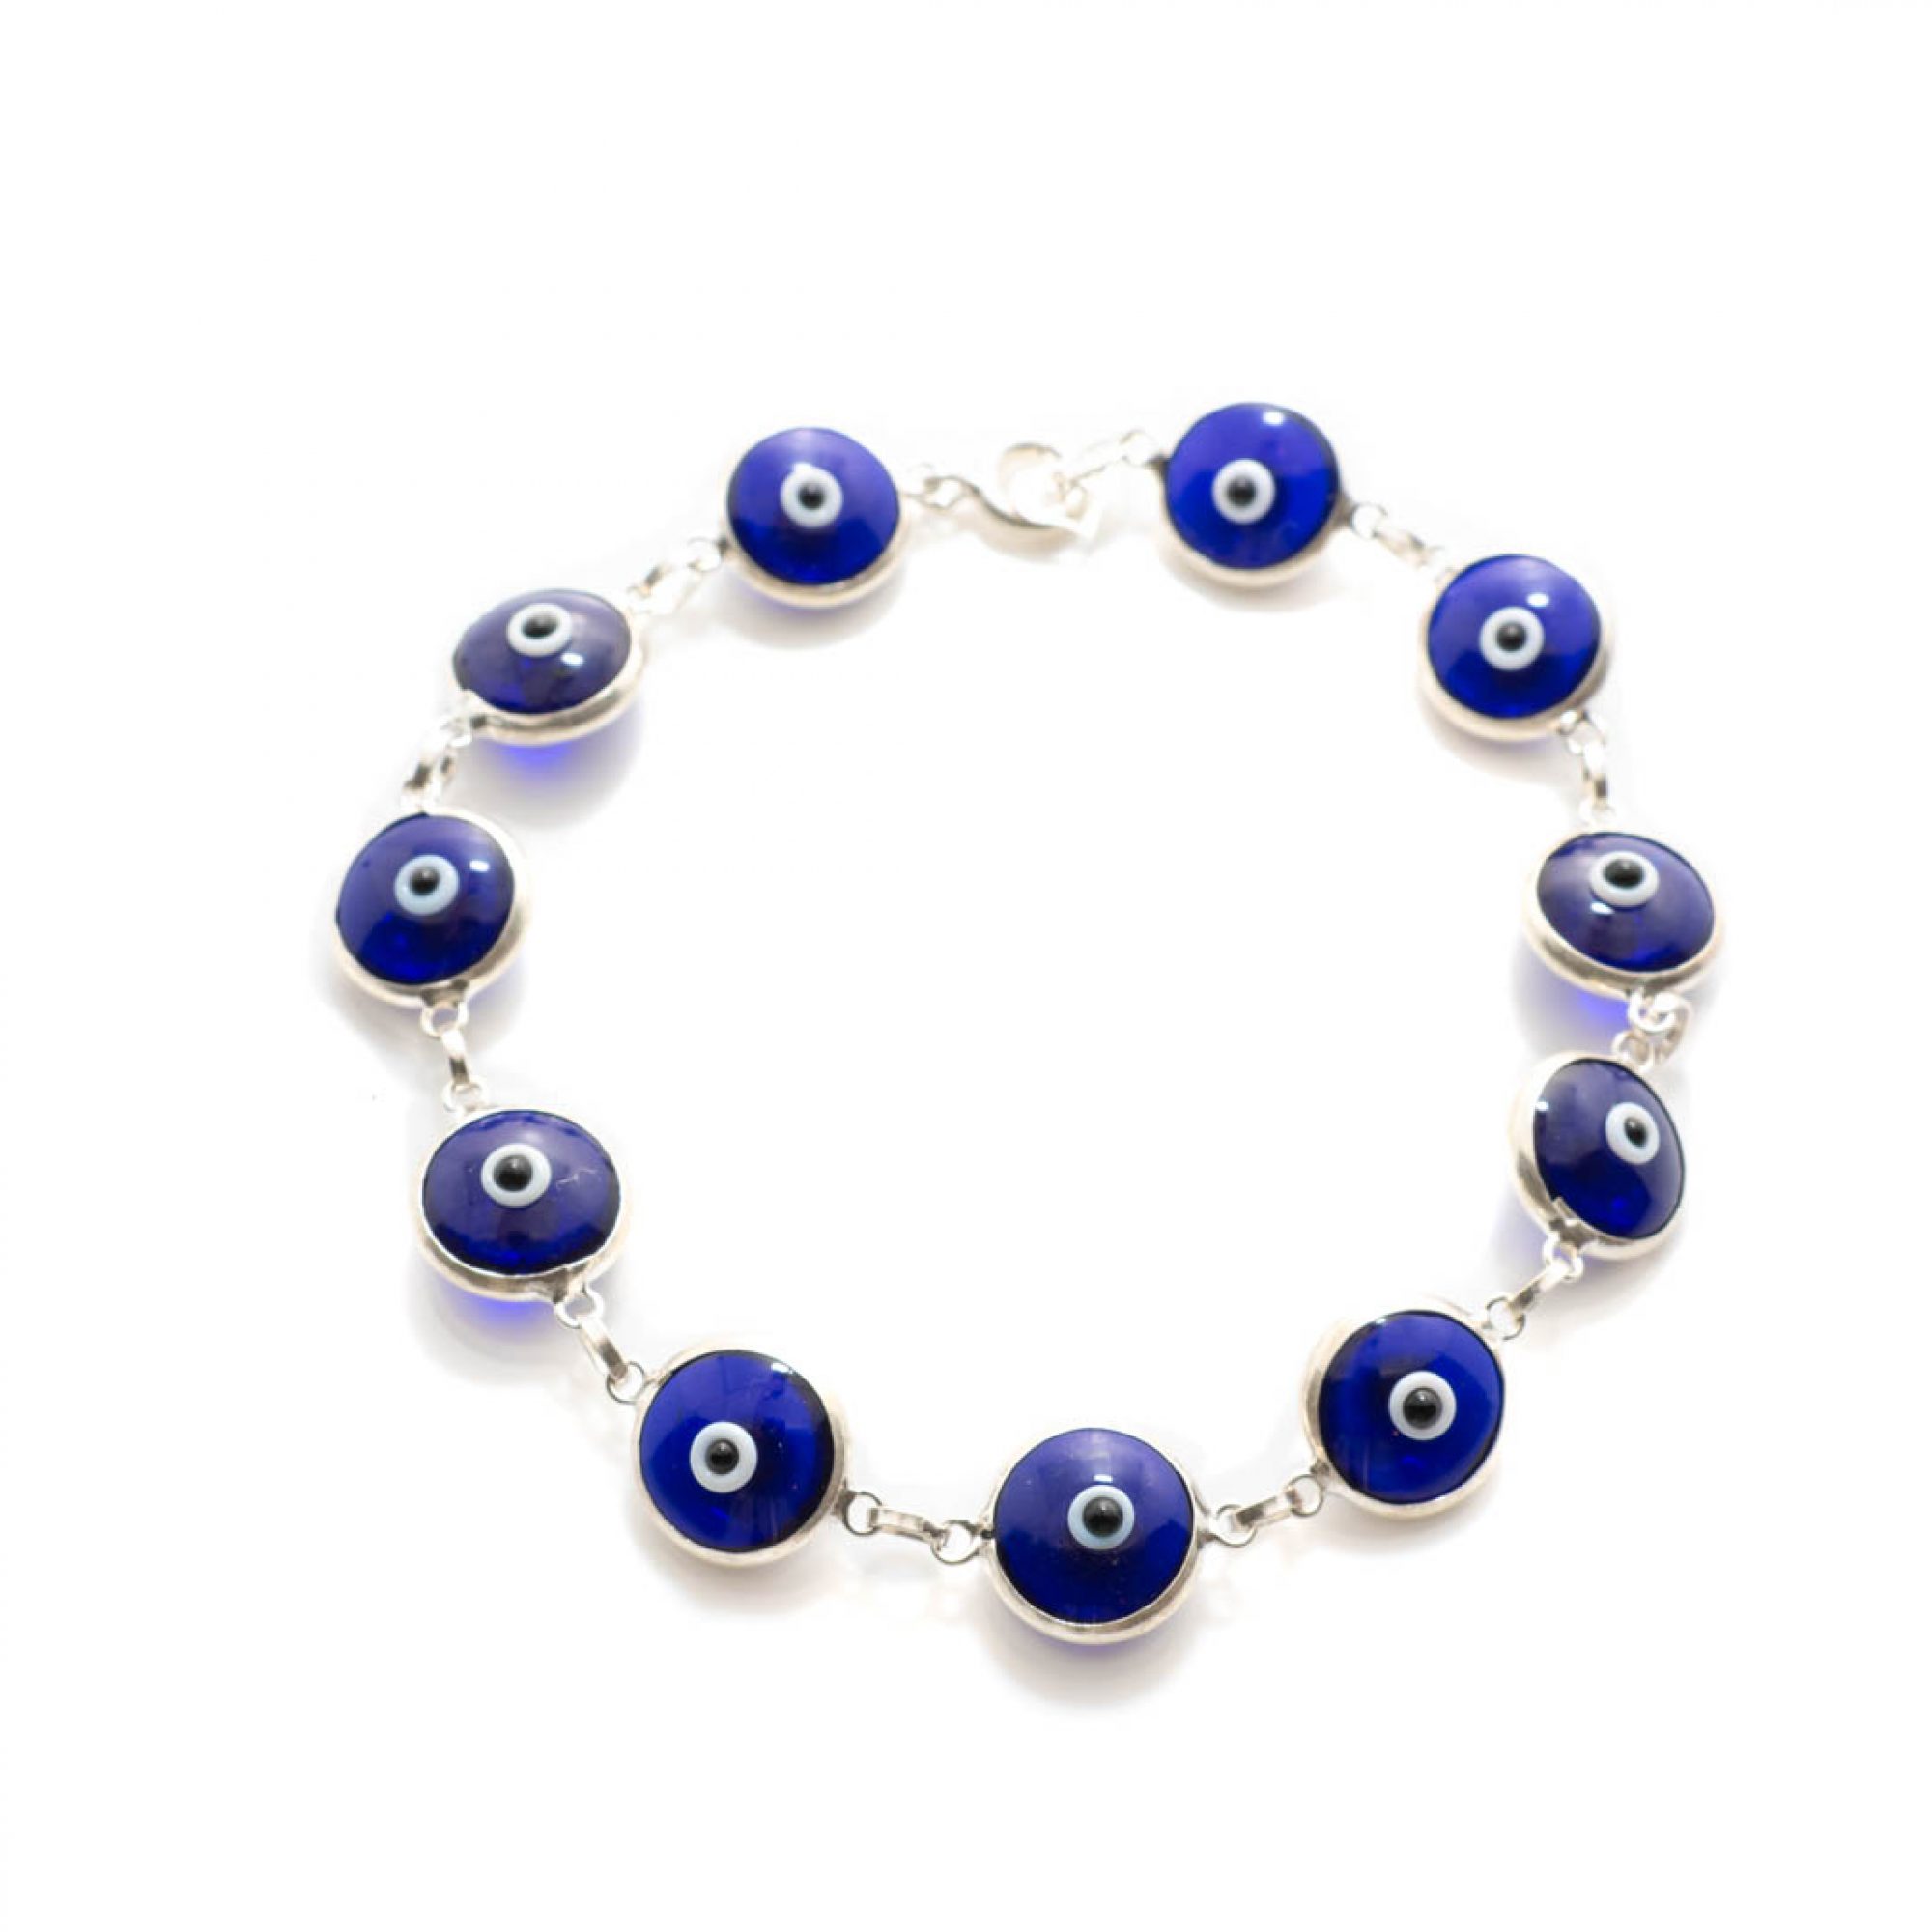 Eye bracelet with lapis lazuli stones